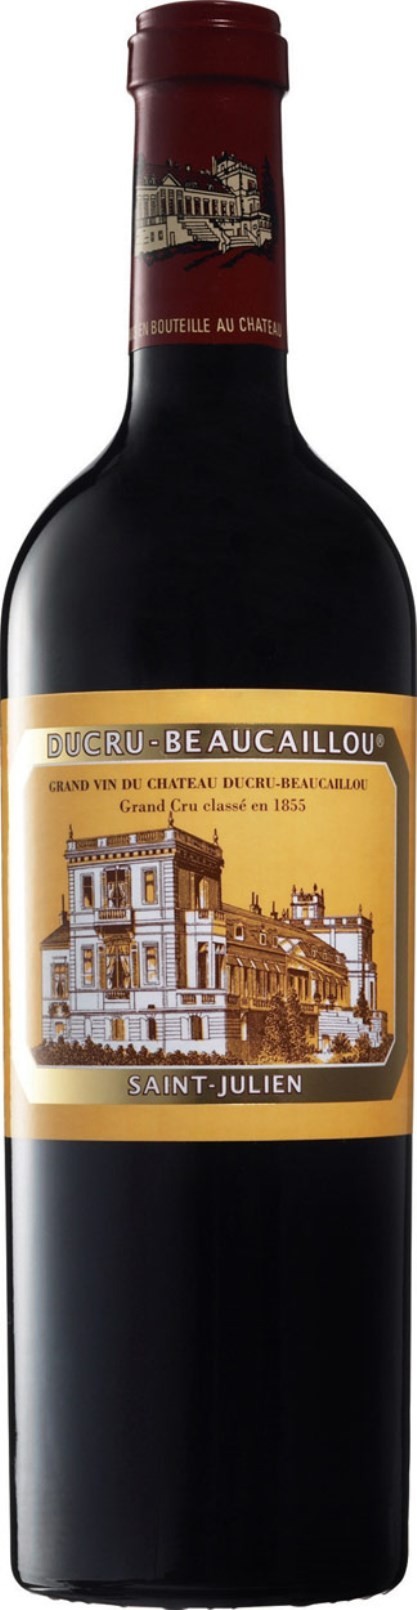 Chateau Ducru Beaucaillou 1985, 1,5l Magnum, Saint Julien